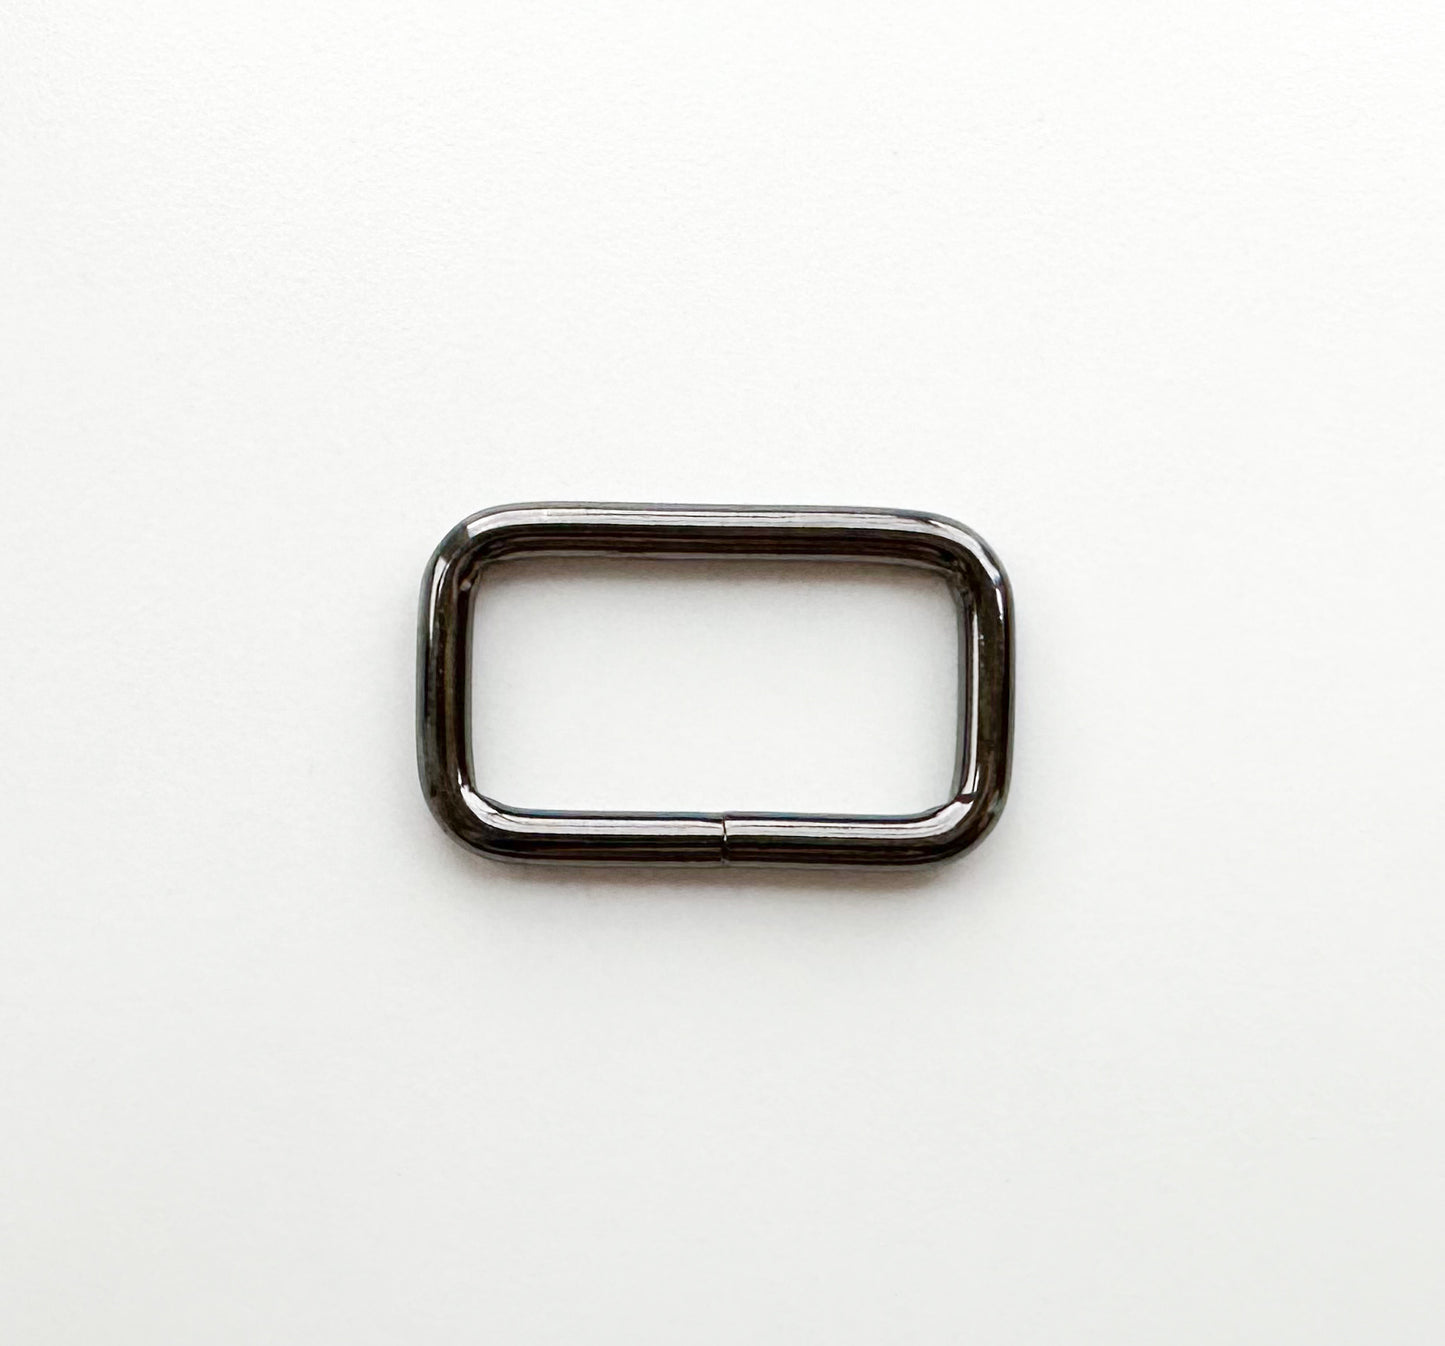 Rectangular rings size: 1-1/2” (38mm)